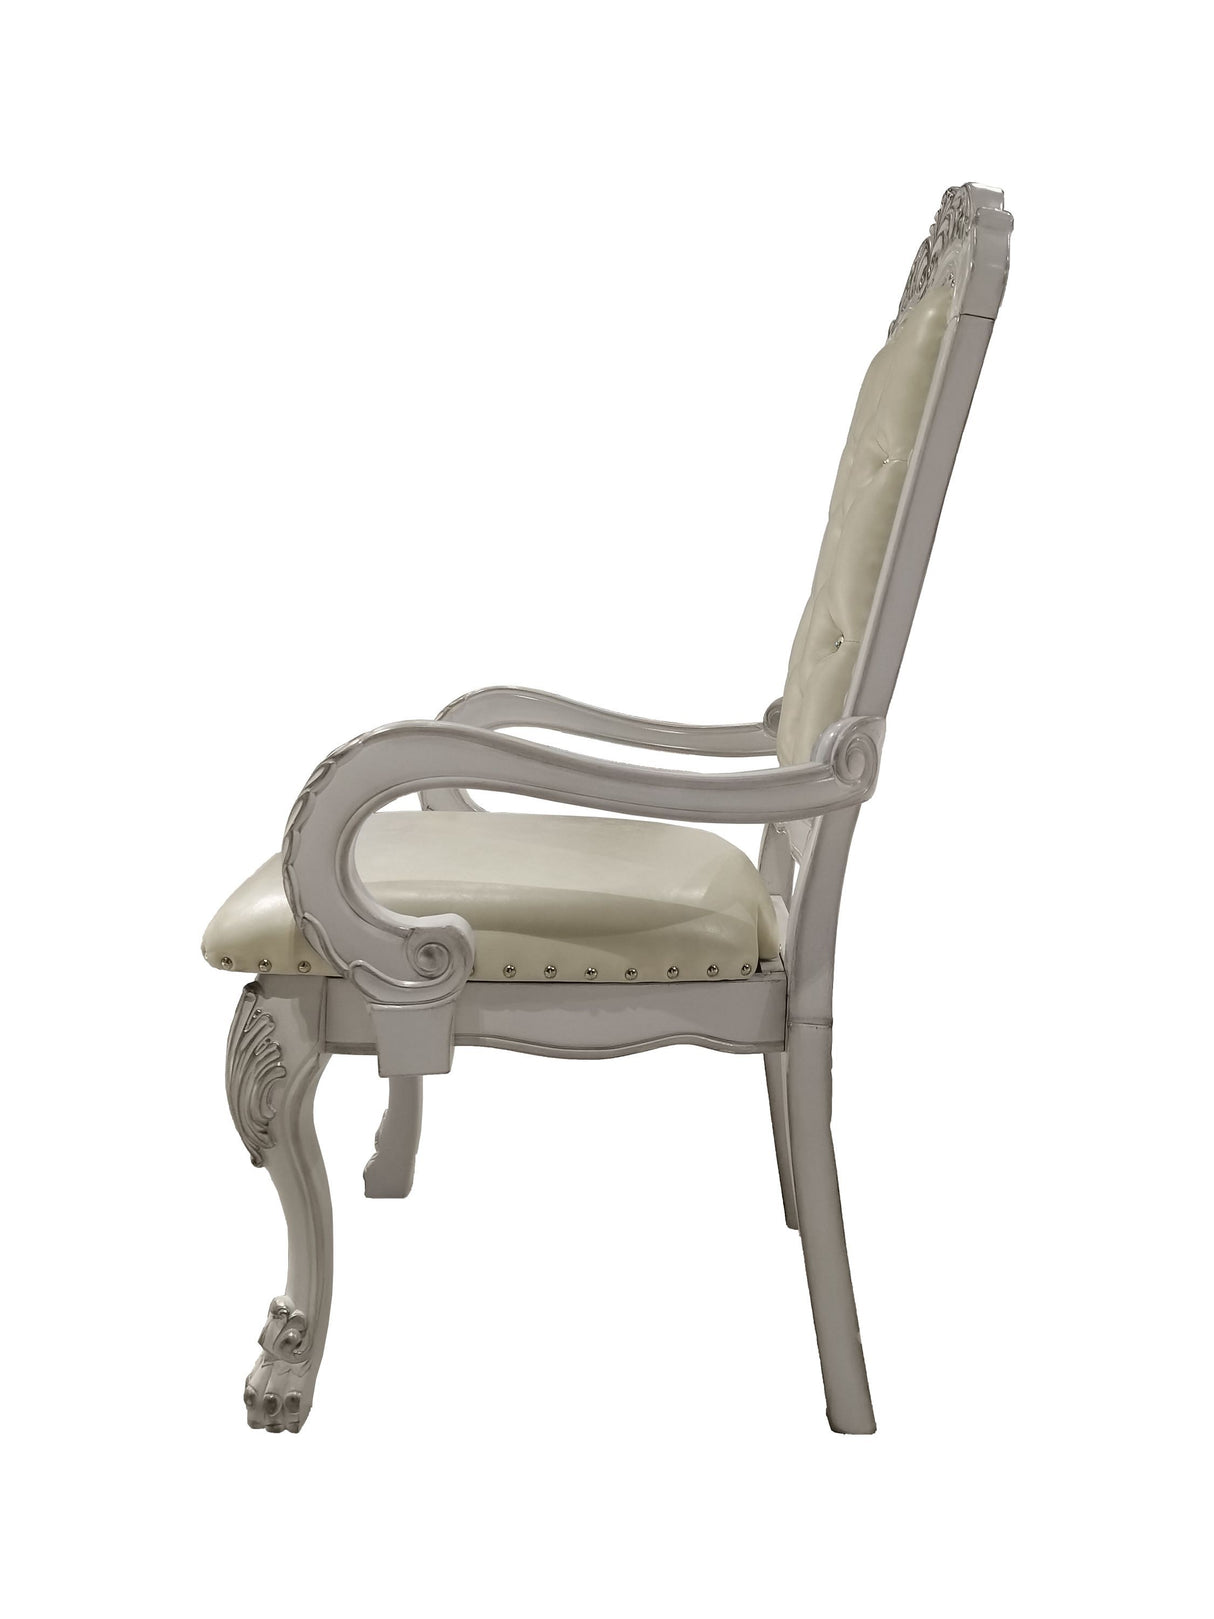 ACME Dresden  Arm Chair (Set-2) in PU & Bone White Finish DN01697 - Home Elegance USA